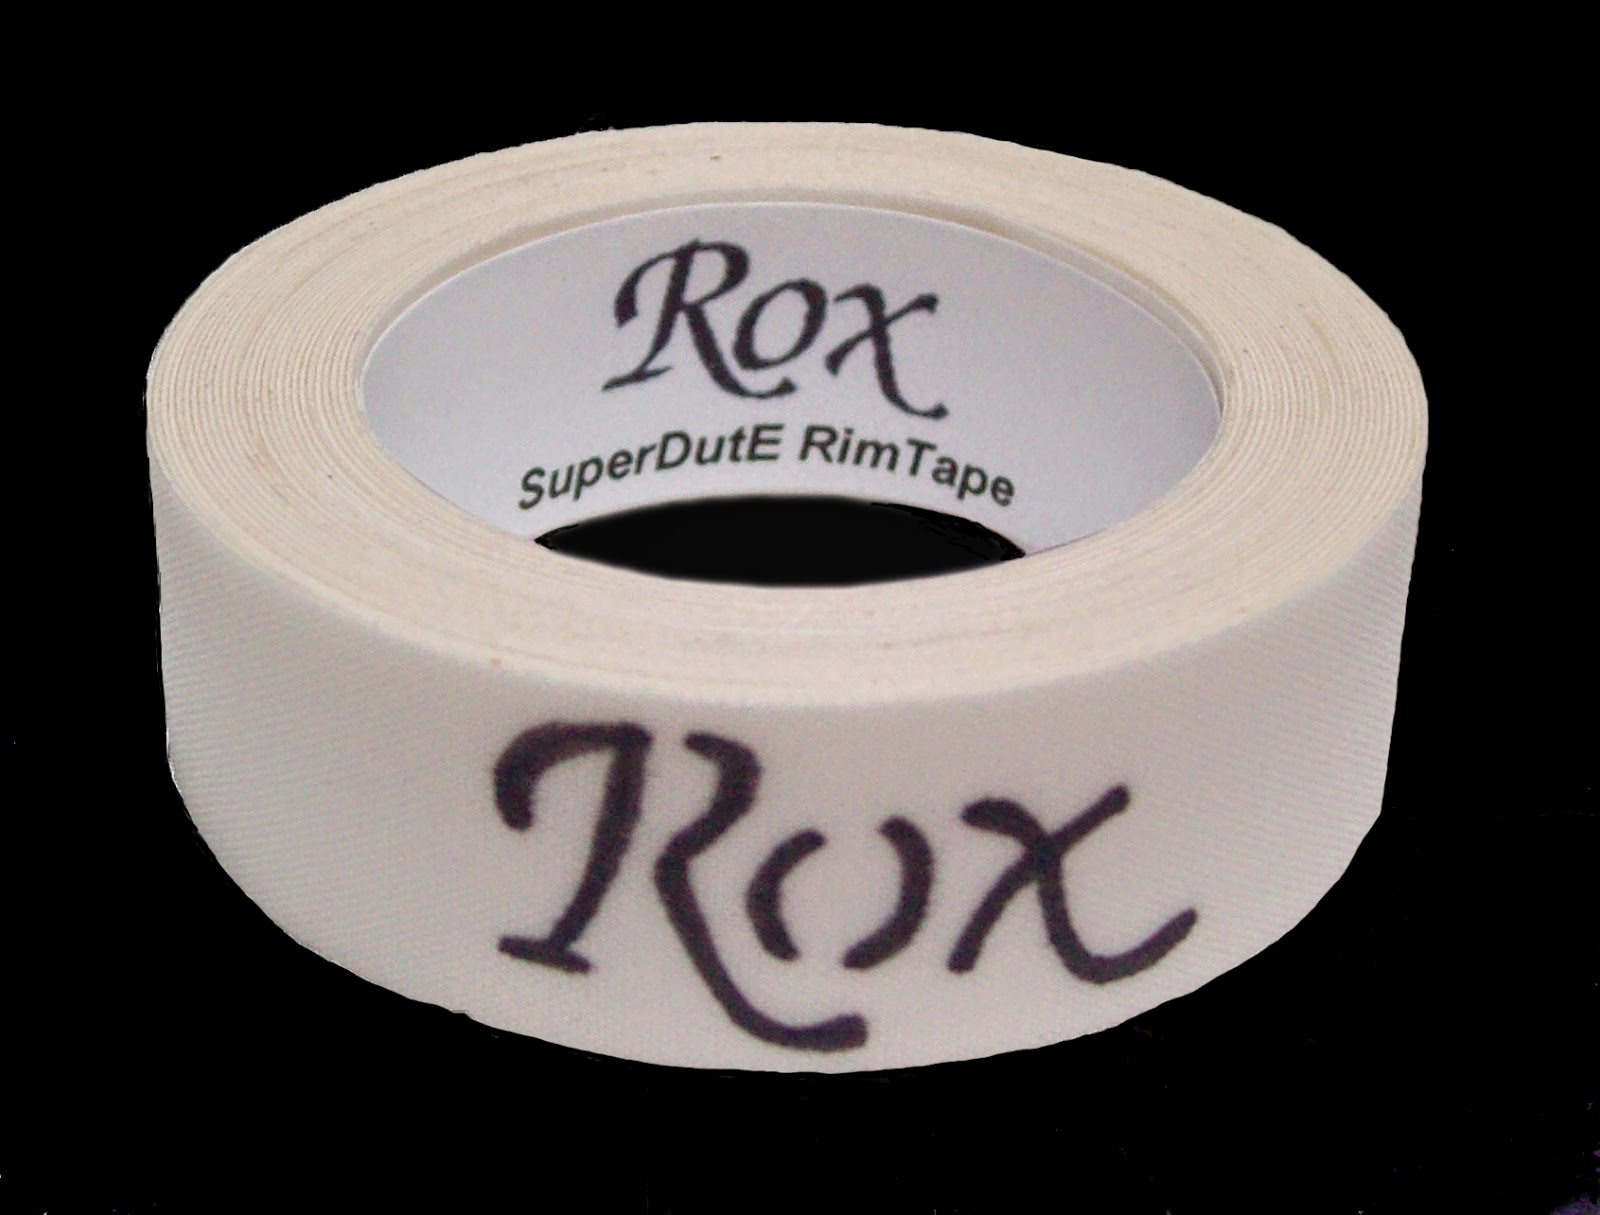 MTB or 650c ROX SuperDutE Rim Tape 75mm Width 26" Length Adhesive-backed Strip 